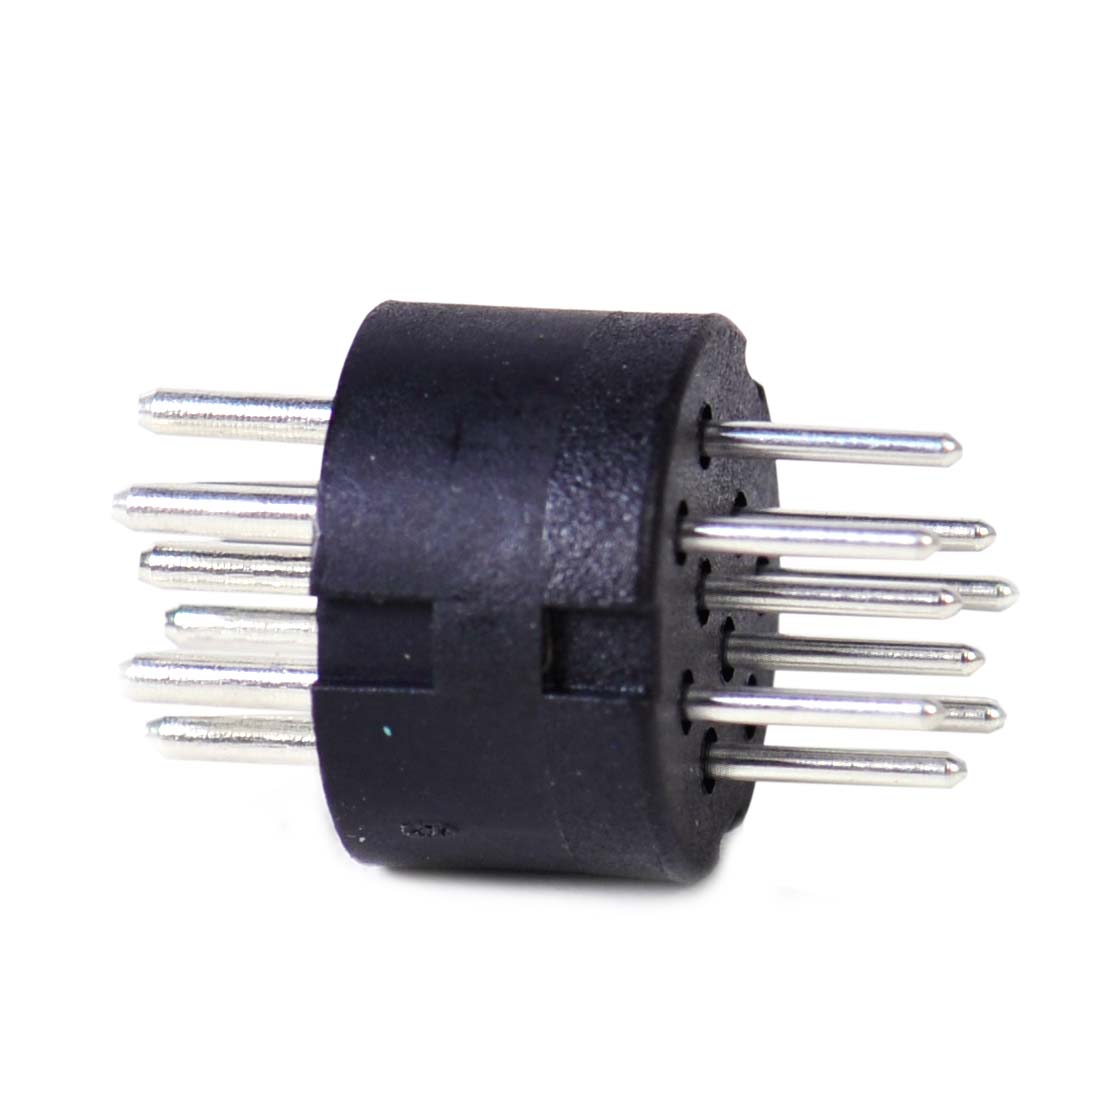 New 9Pin Male Mini Din Connector Adapter Adaptor Converter Plug for Promedia GMX